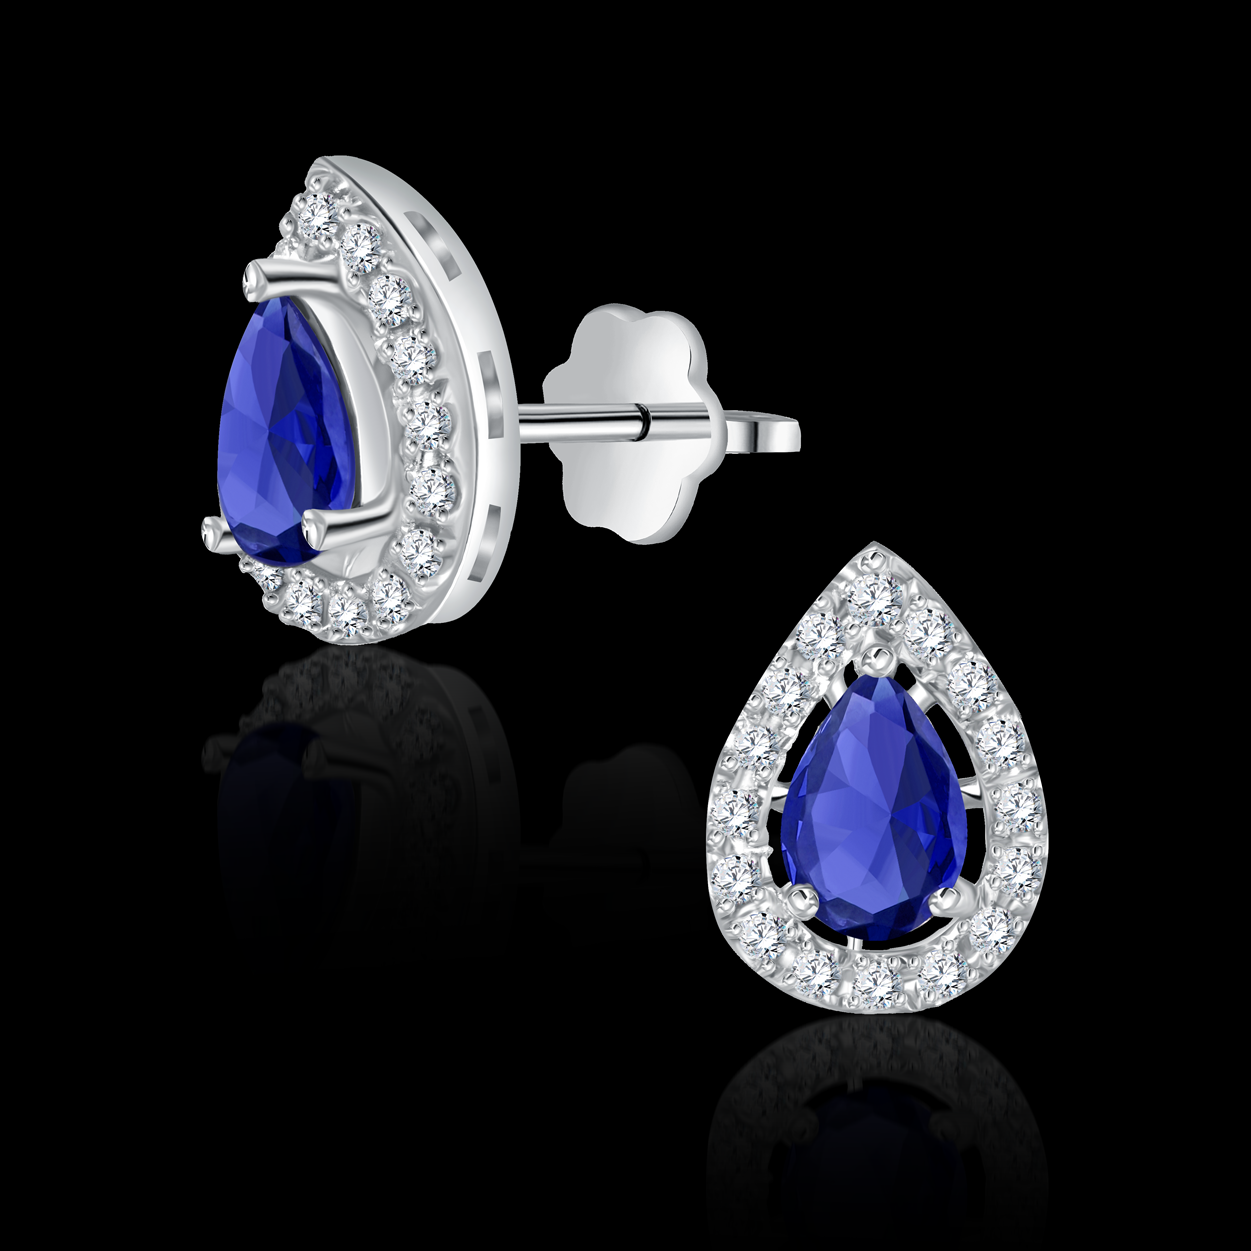 Pear shaped sapphire Stud earrings adorned with single halo diamond pave - TK-0021BE